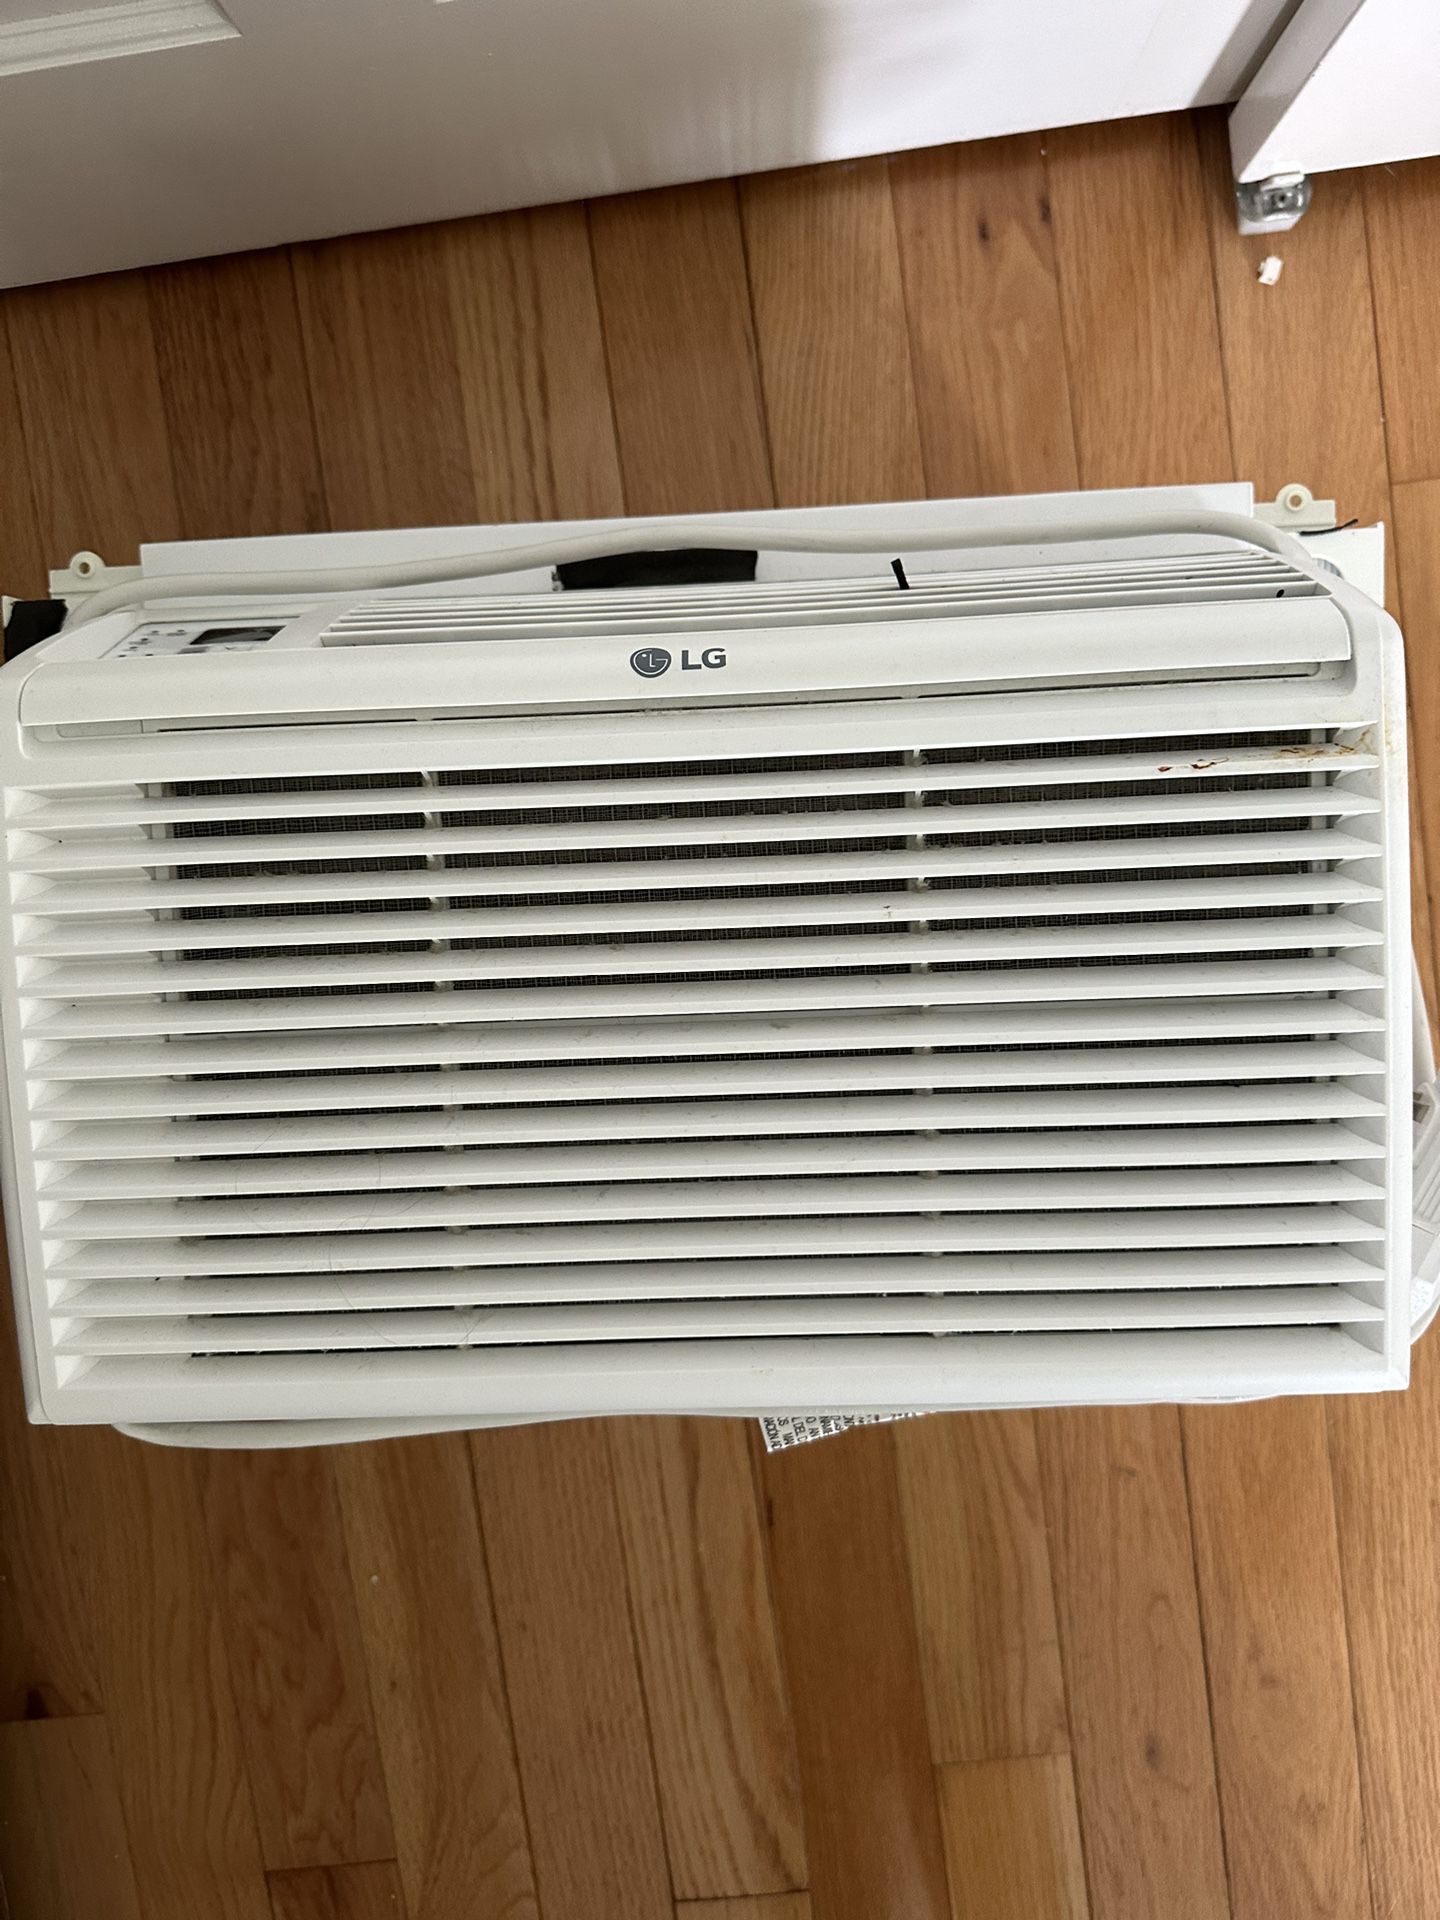 2 Air Conditioner Window Units